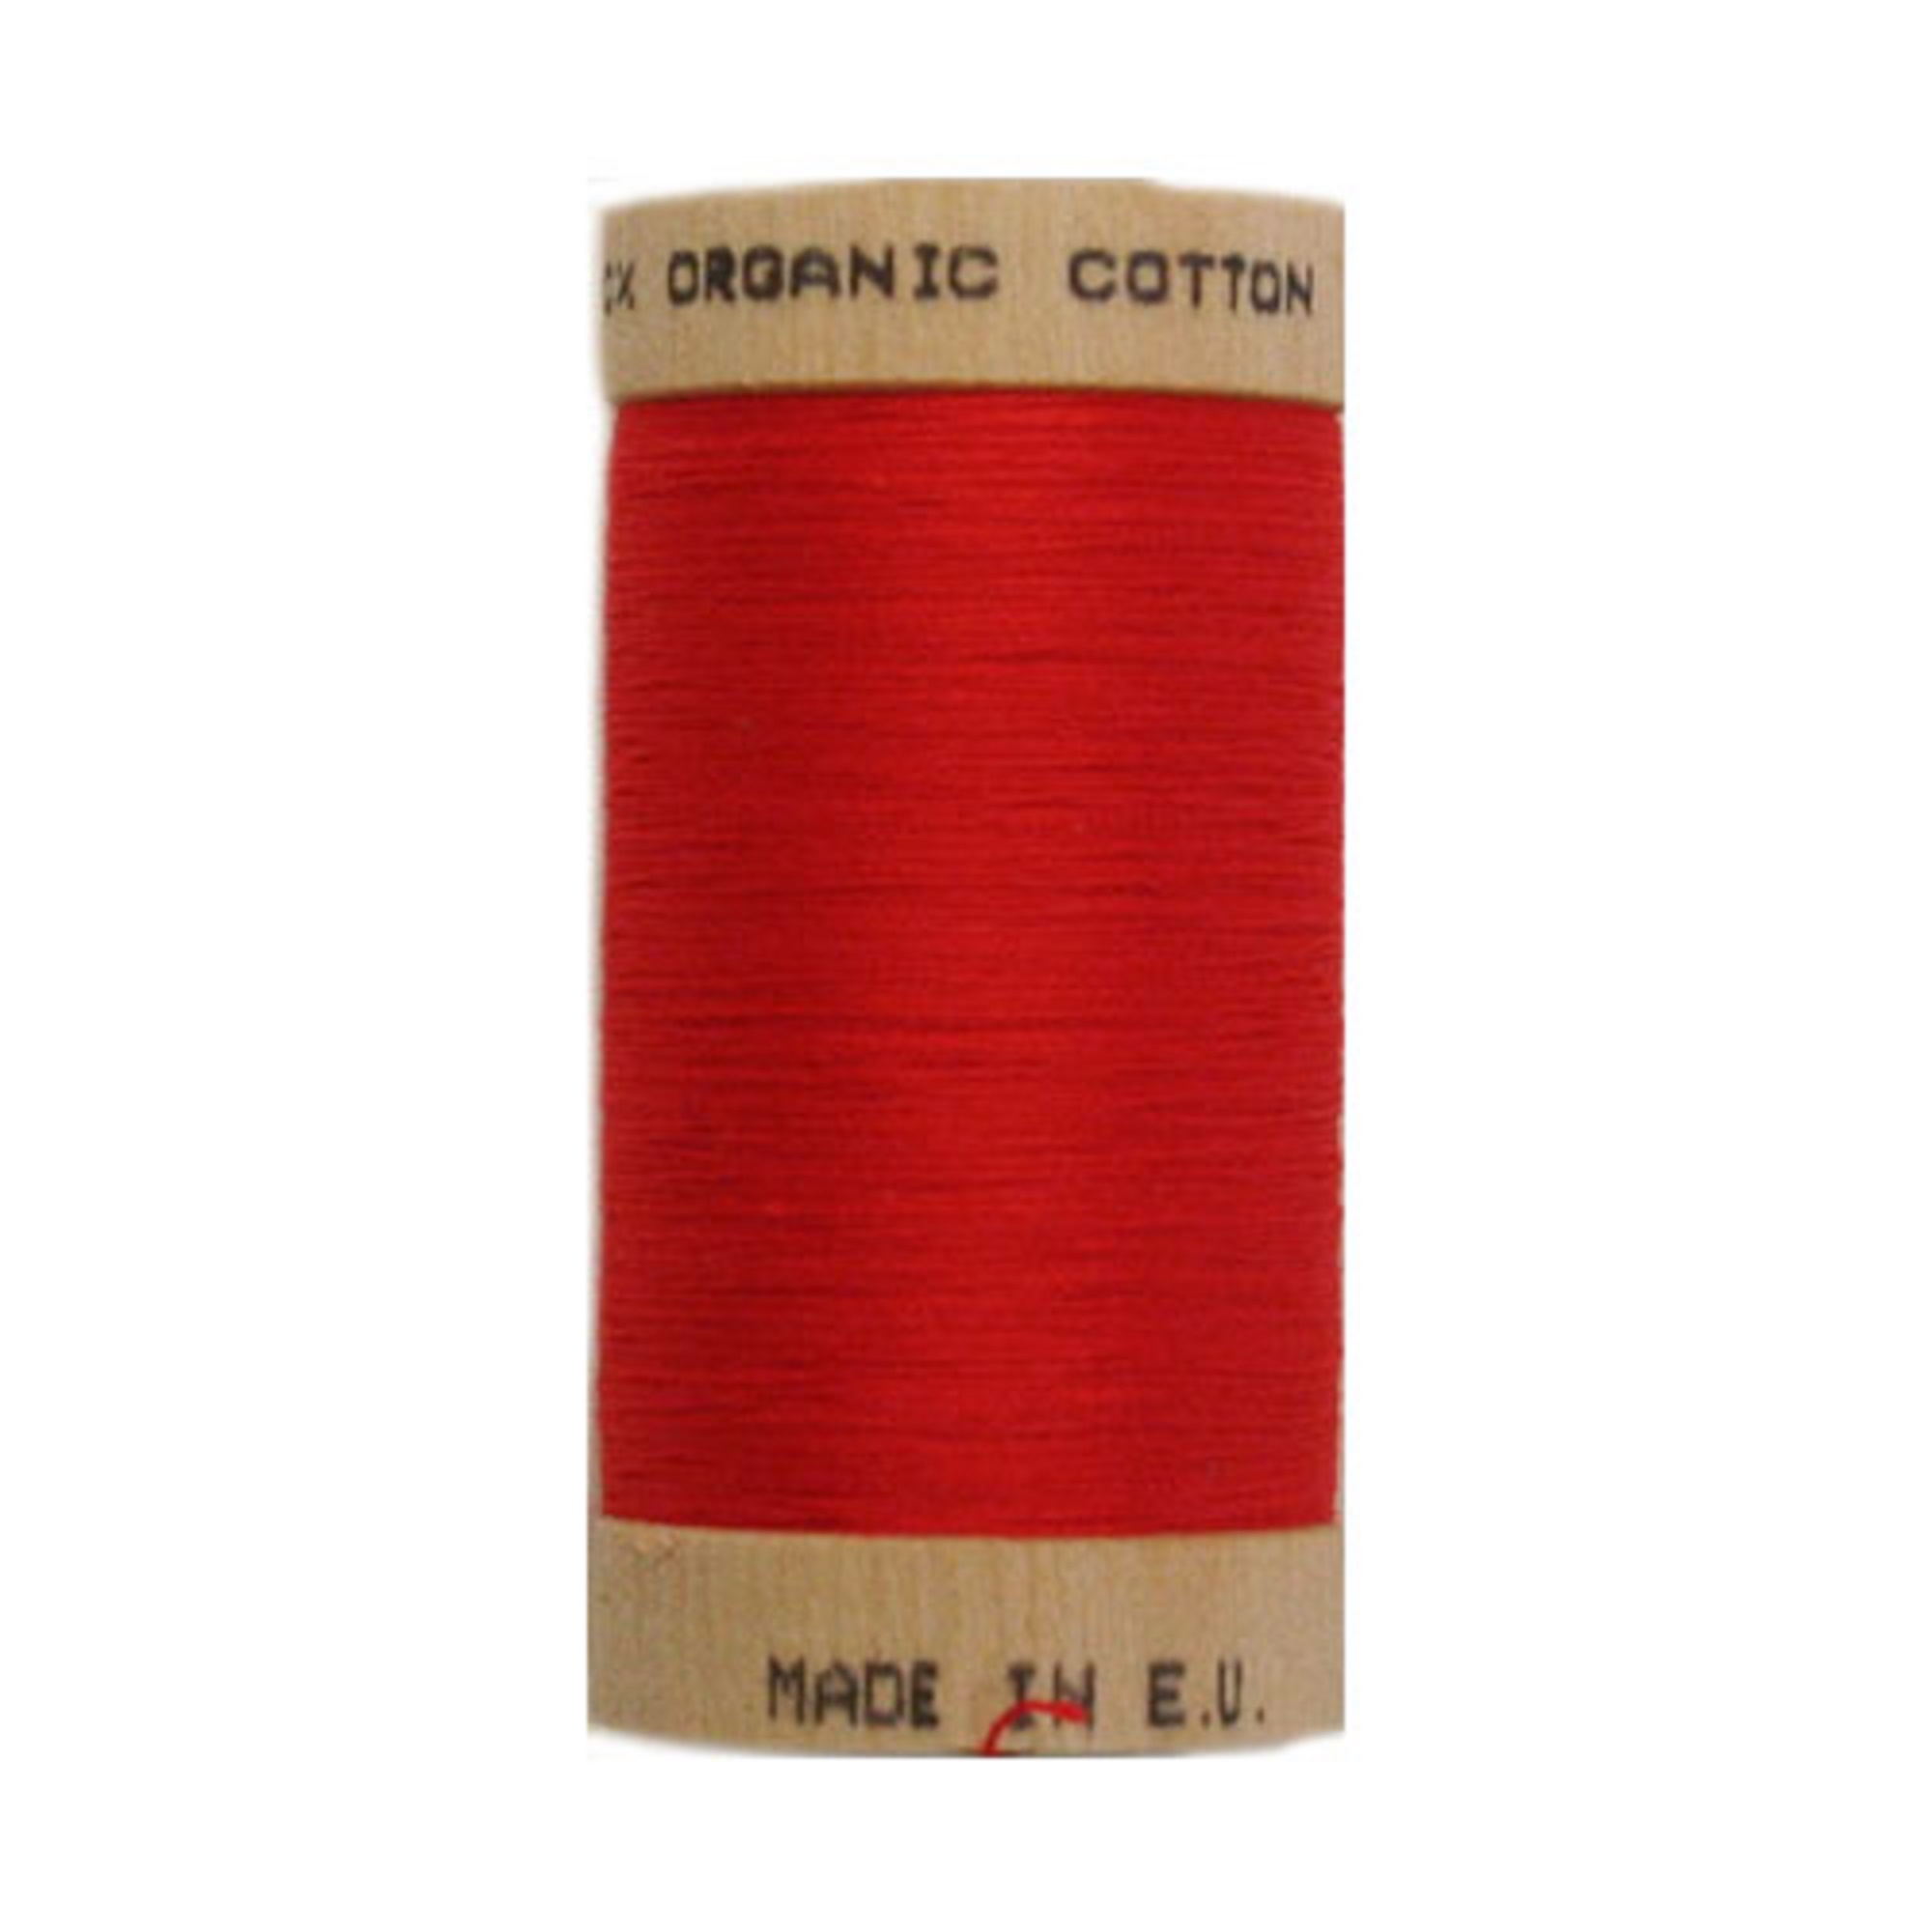 Scanfil Organic Cotton Sewing Thread